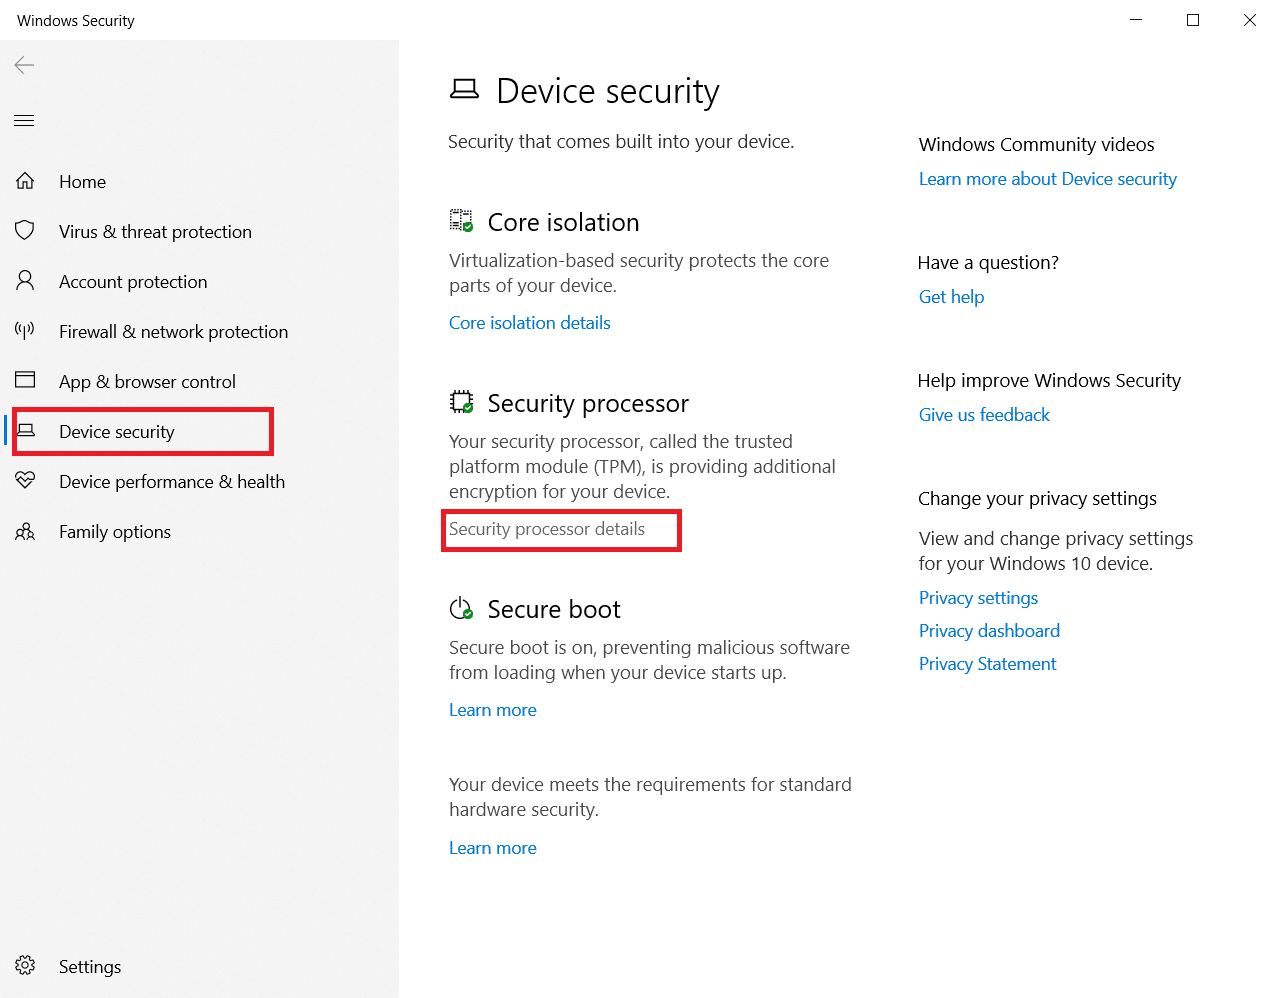 Security processor details option